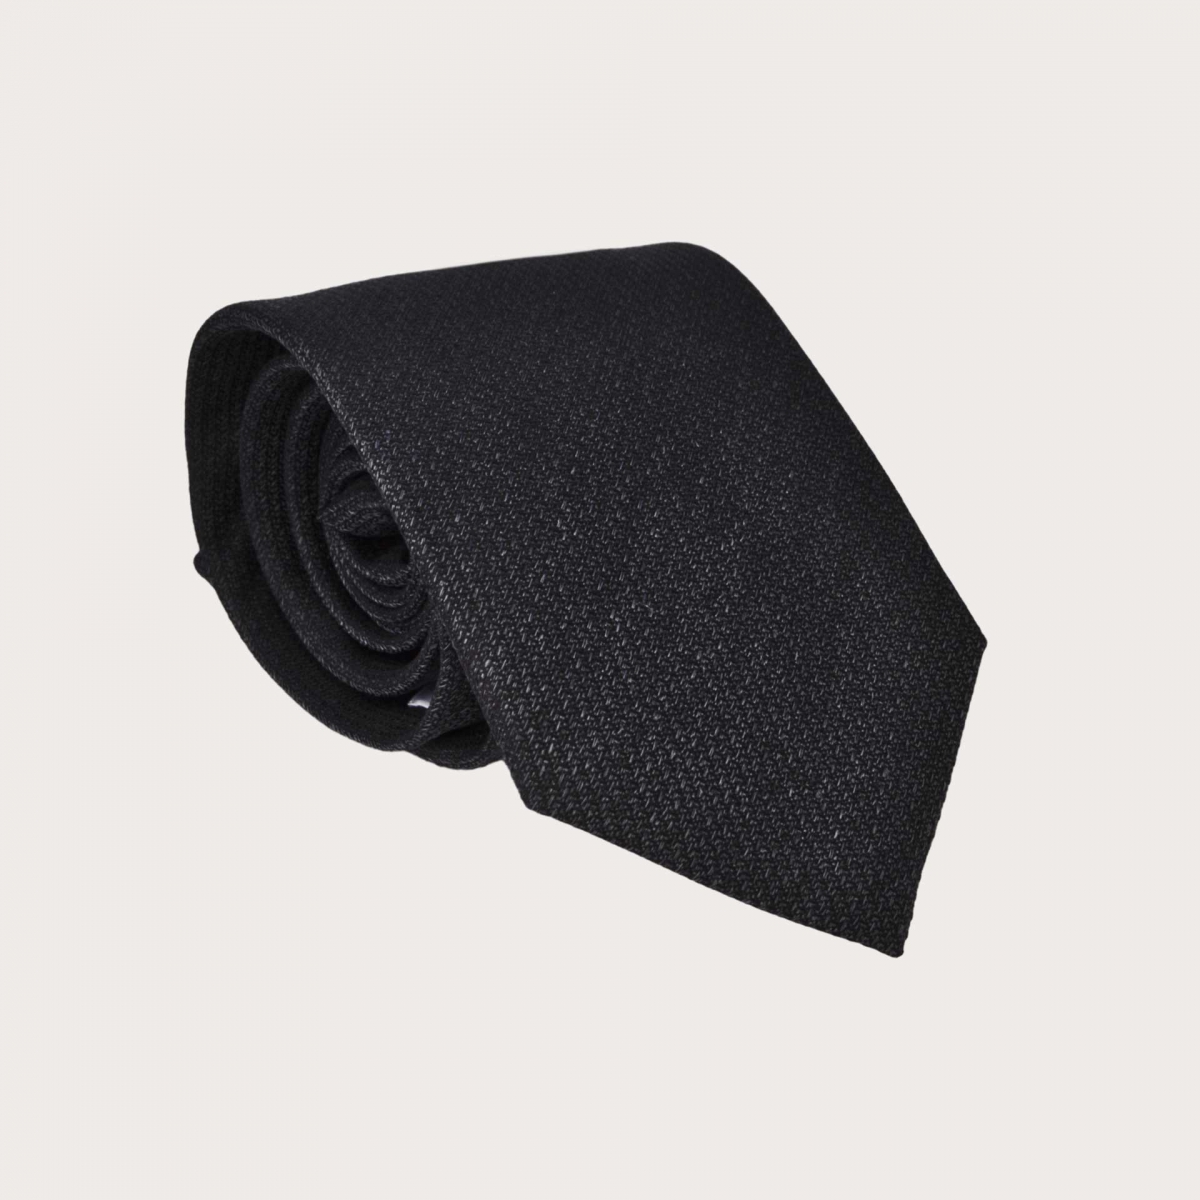 BRUCLE Corbata elegante seda negra melange